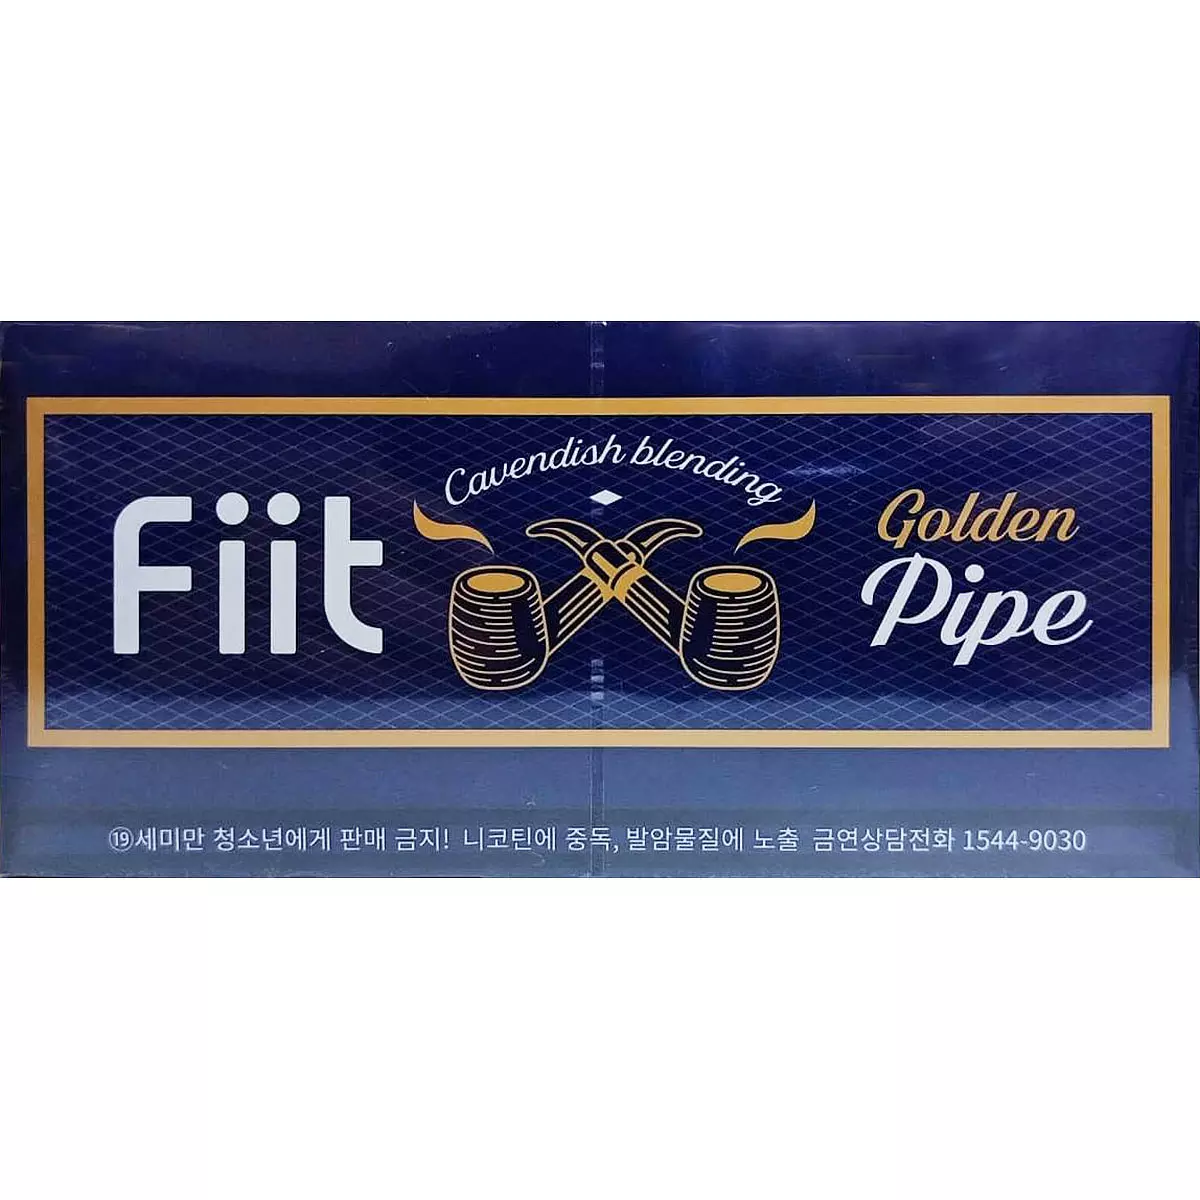 Fiit - Golden Pipe